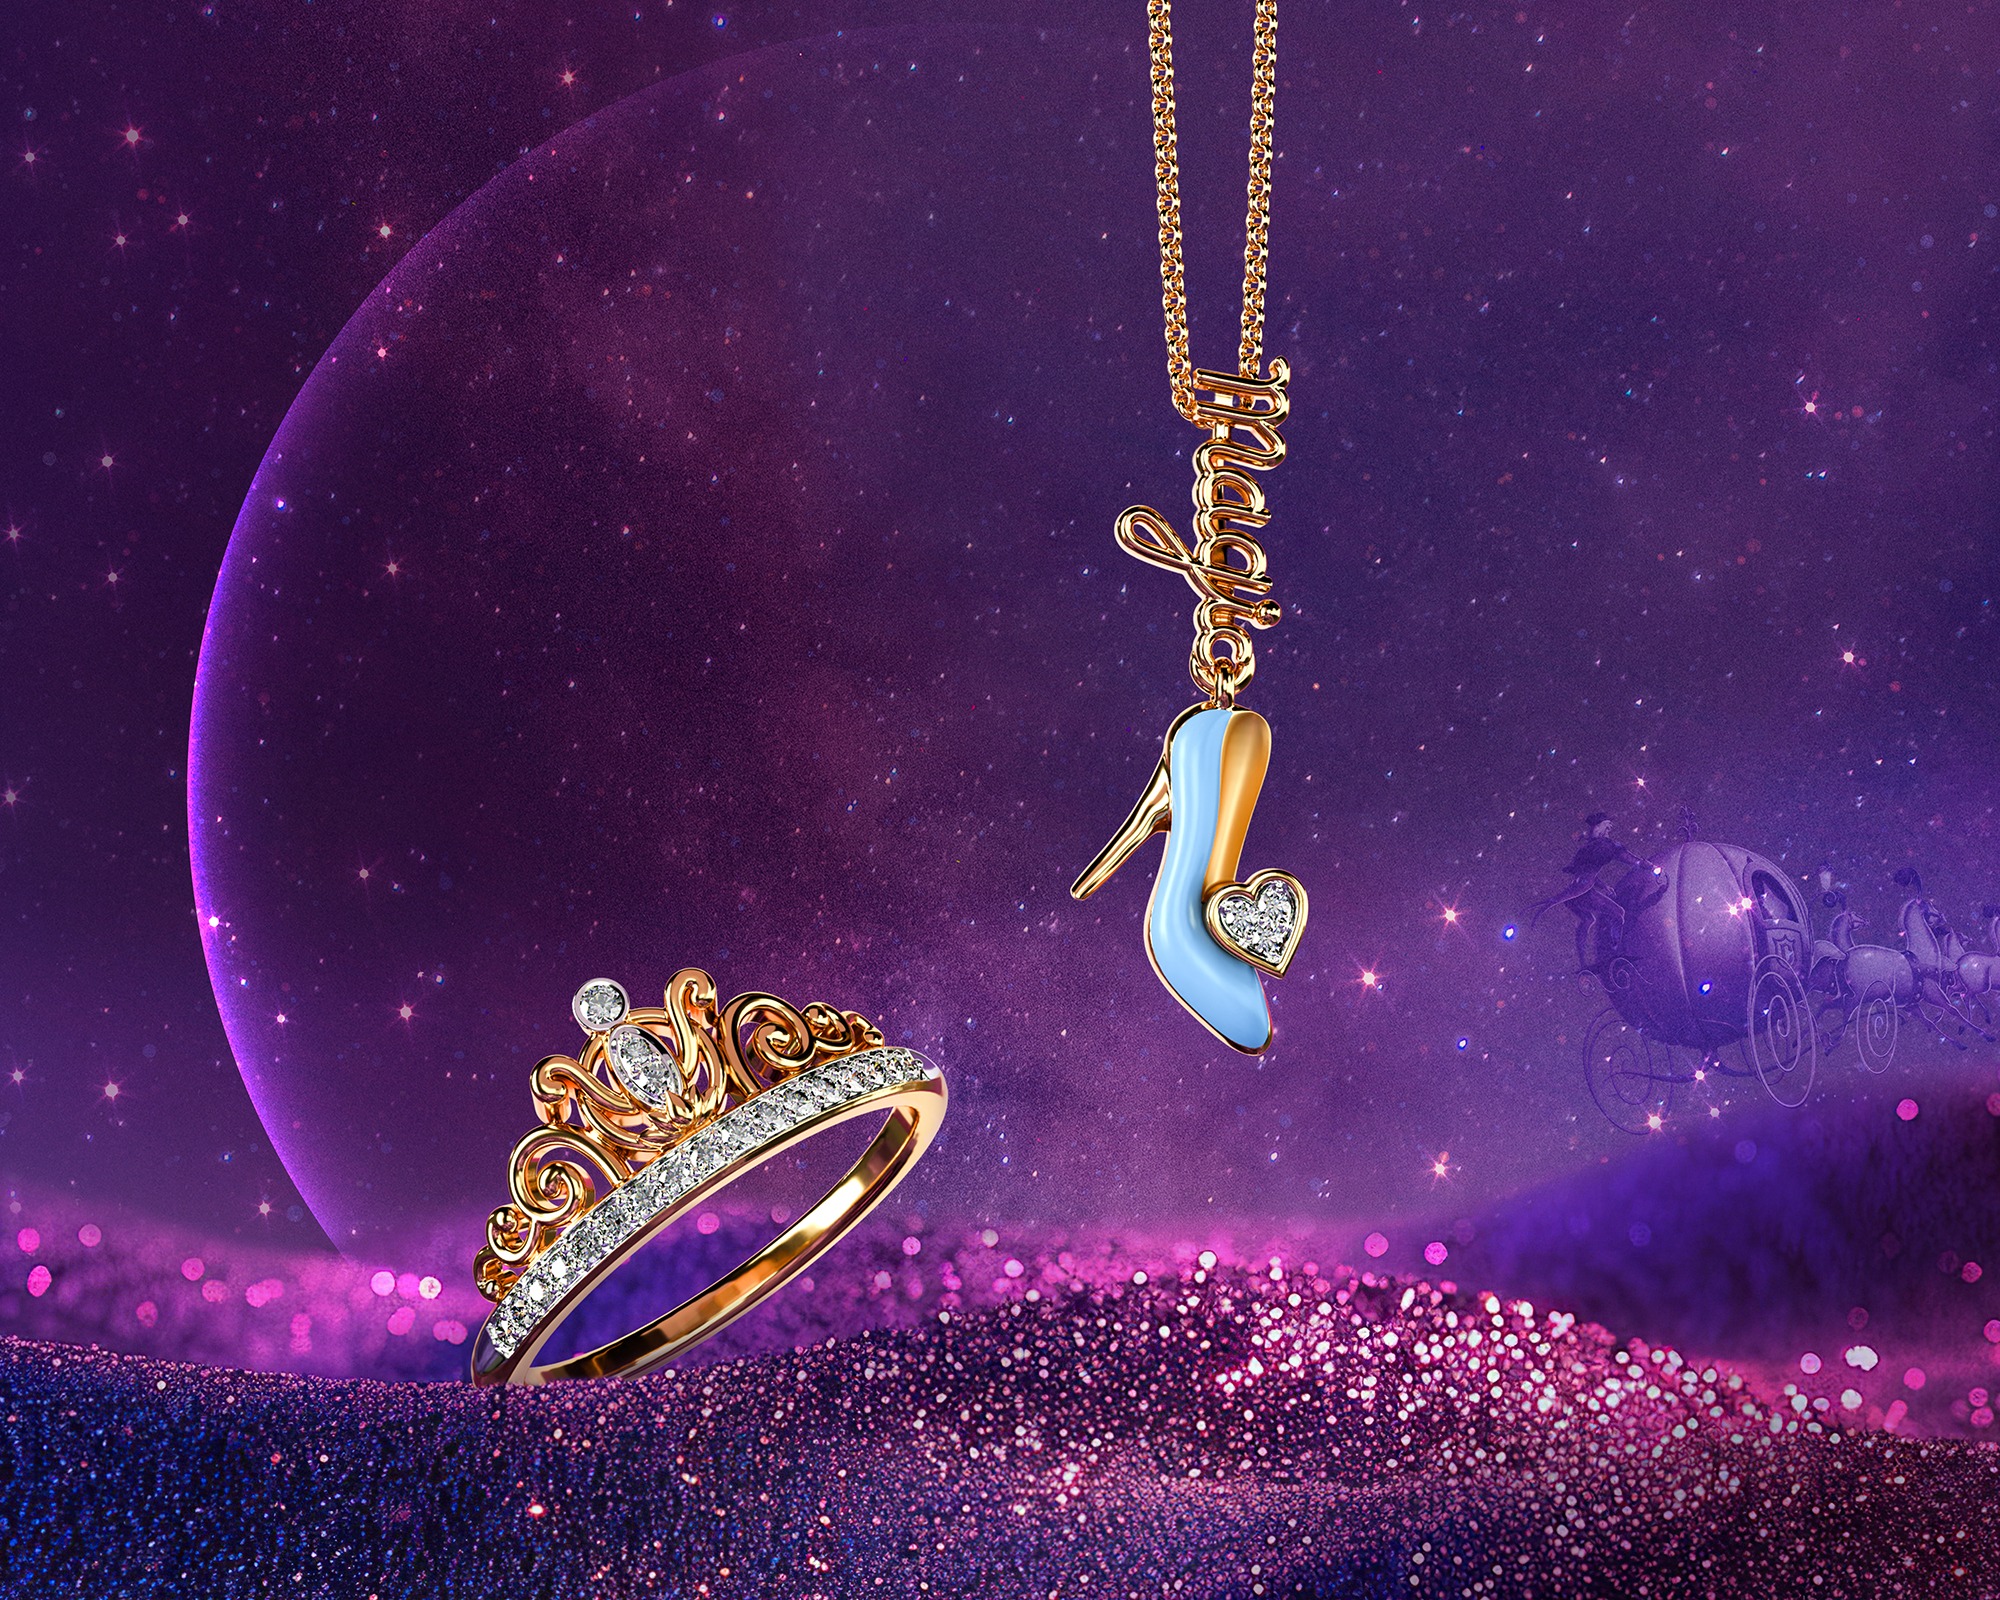 Disney’s Cinderella Inspired jewellery collection